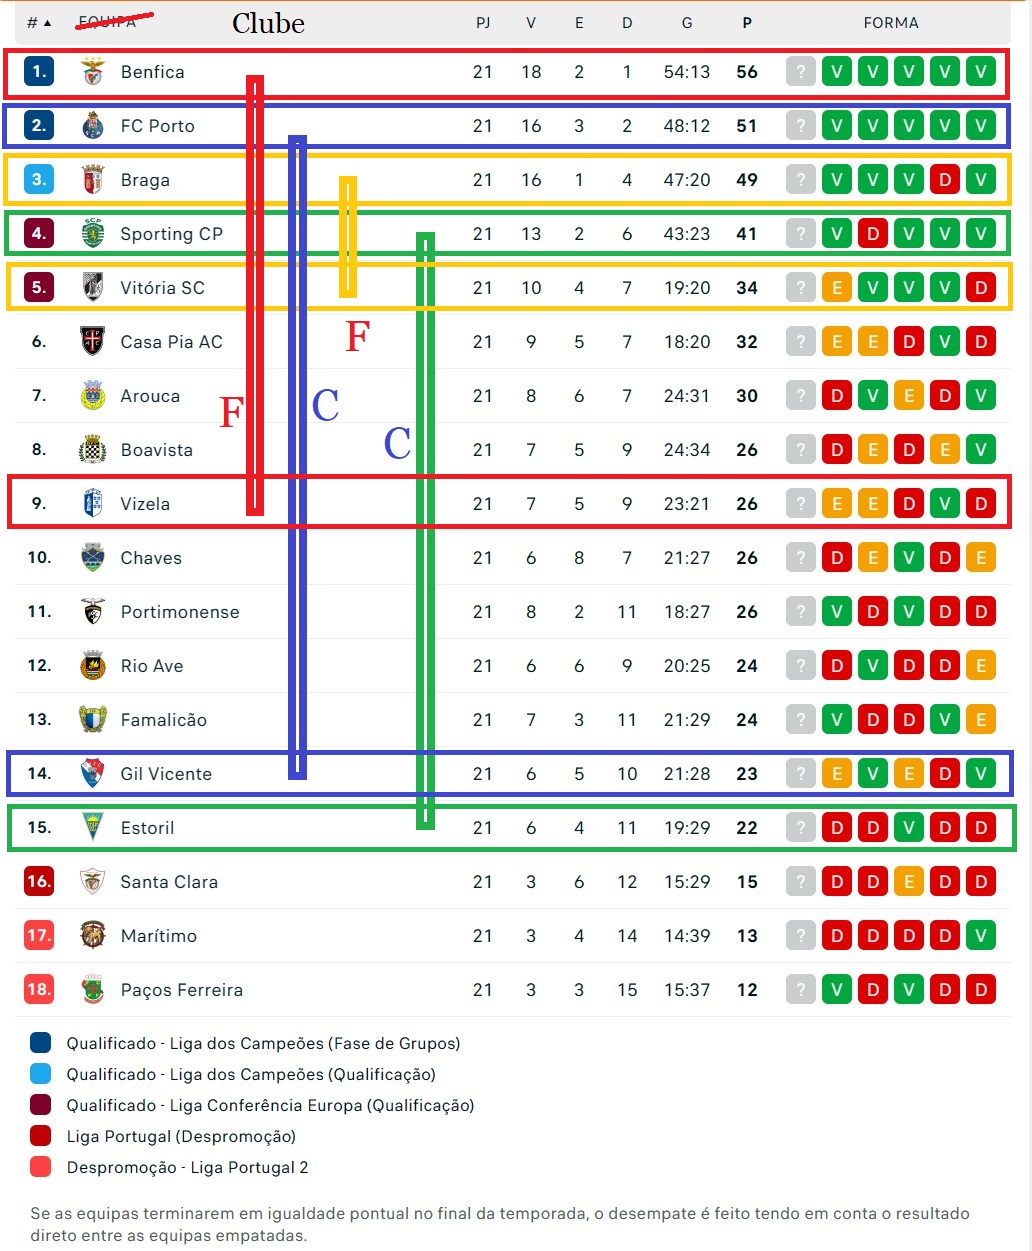 Italy - Serie B Girone B Standings (2022-2023)